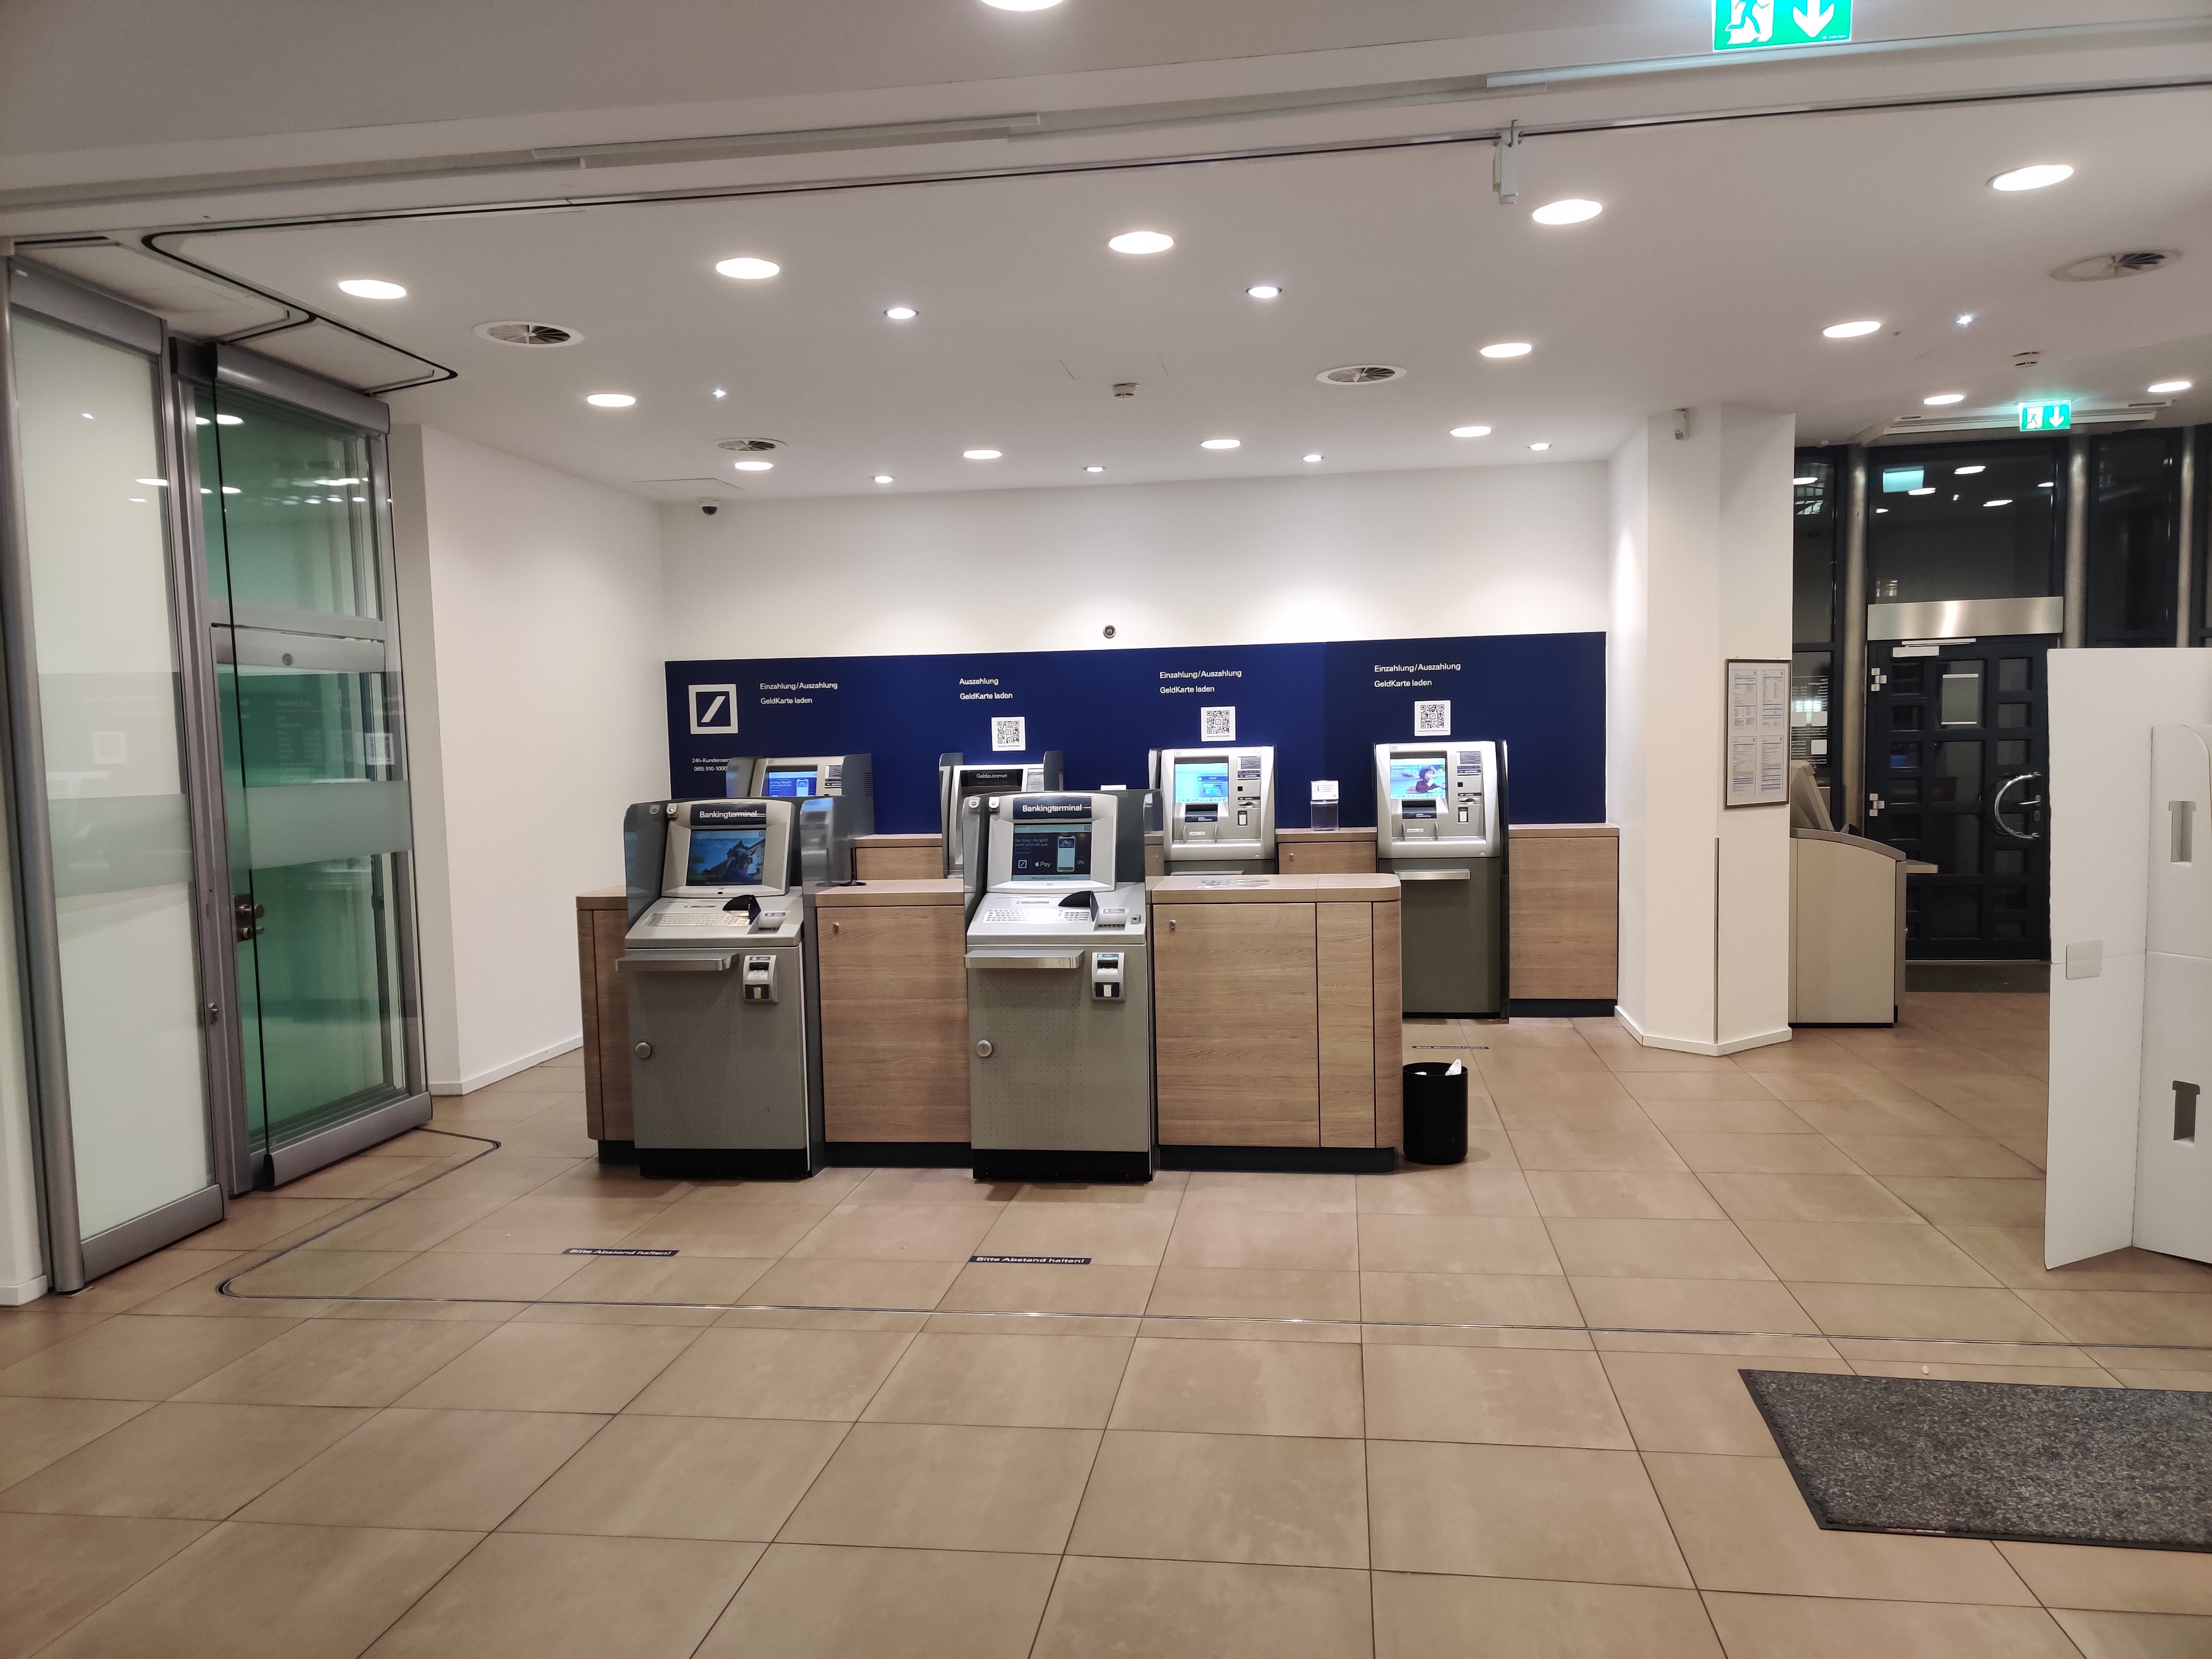 Deutsche Bank Filiale, Husemannplatz 5a in Bochum